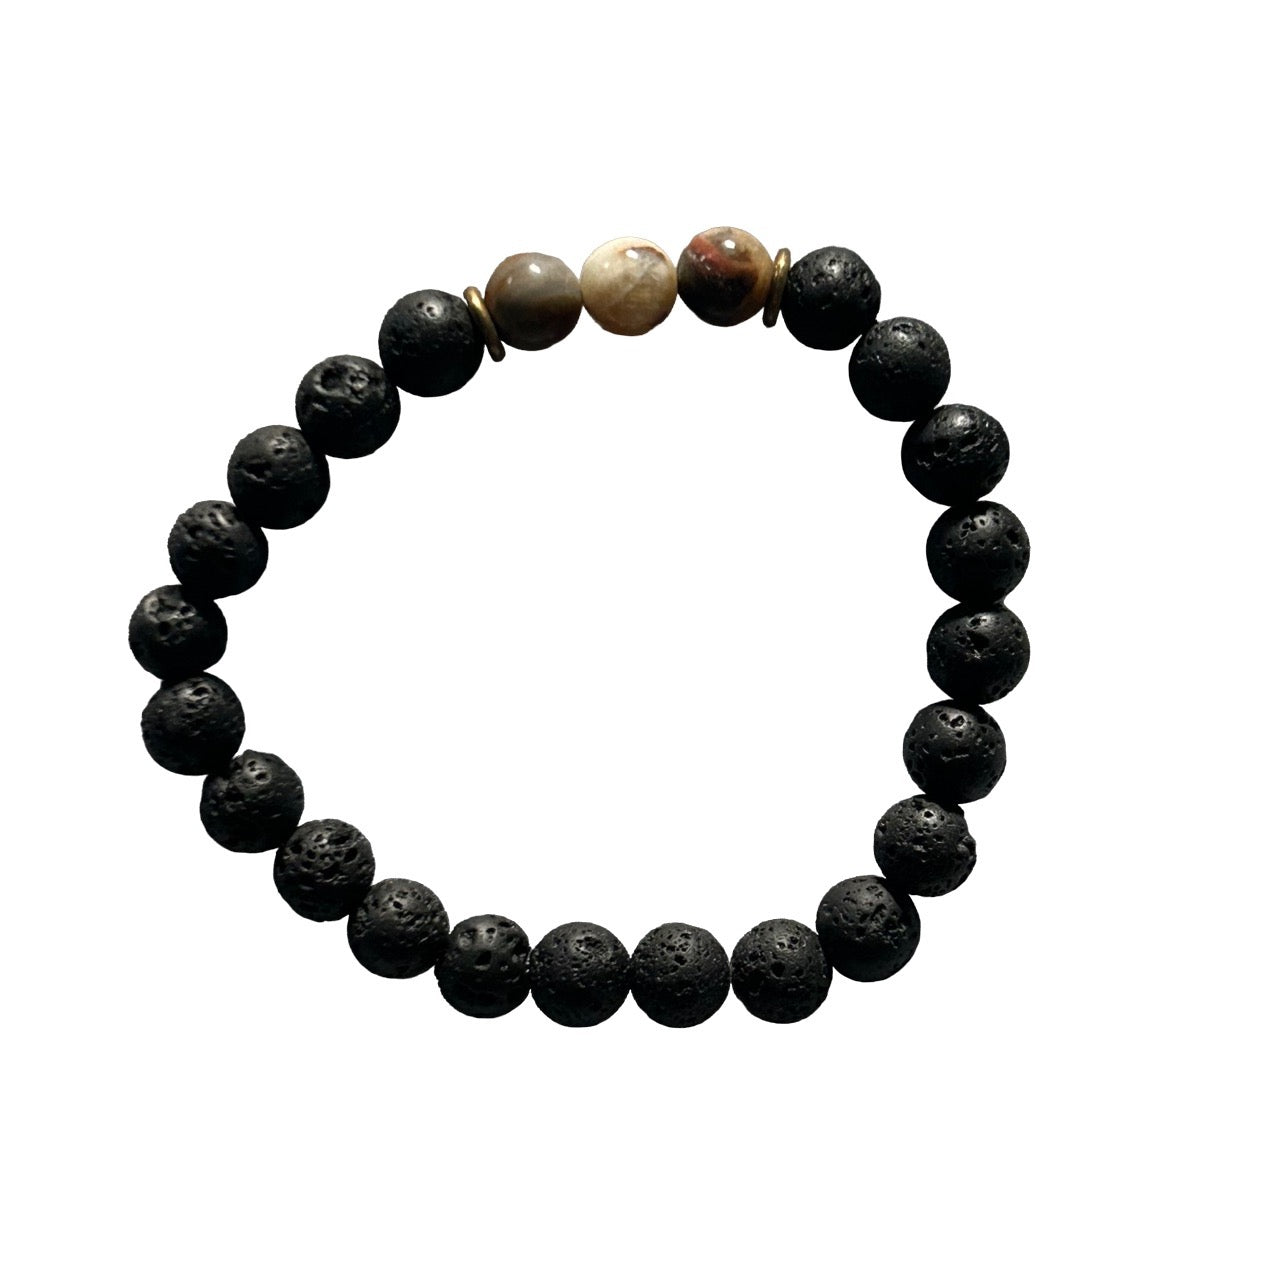 3 amazonite beads on lava bead bracelet